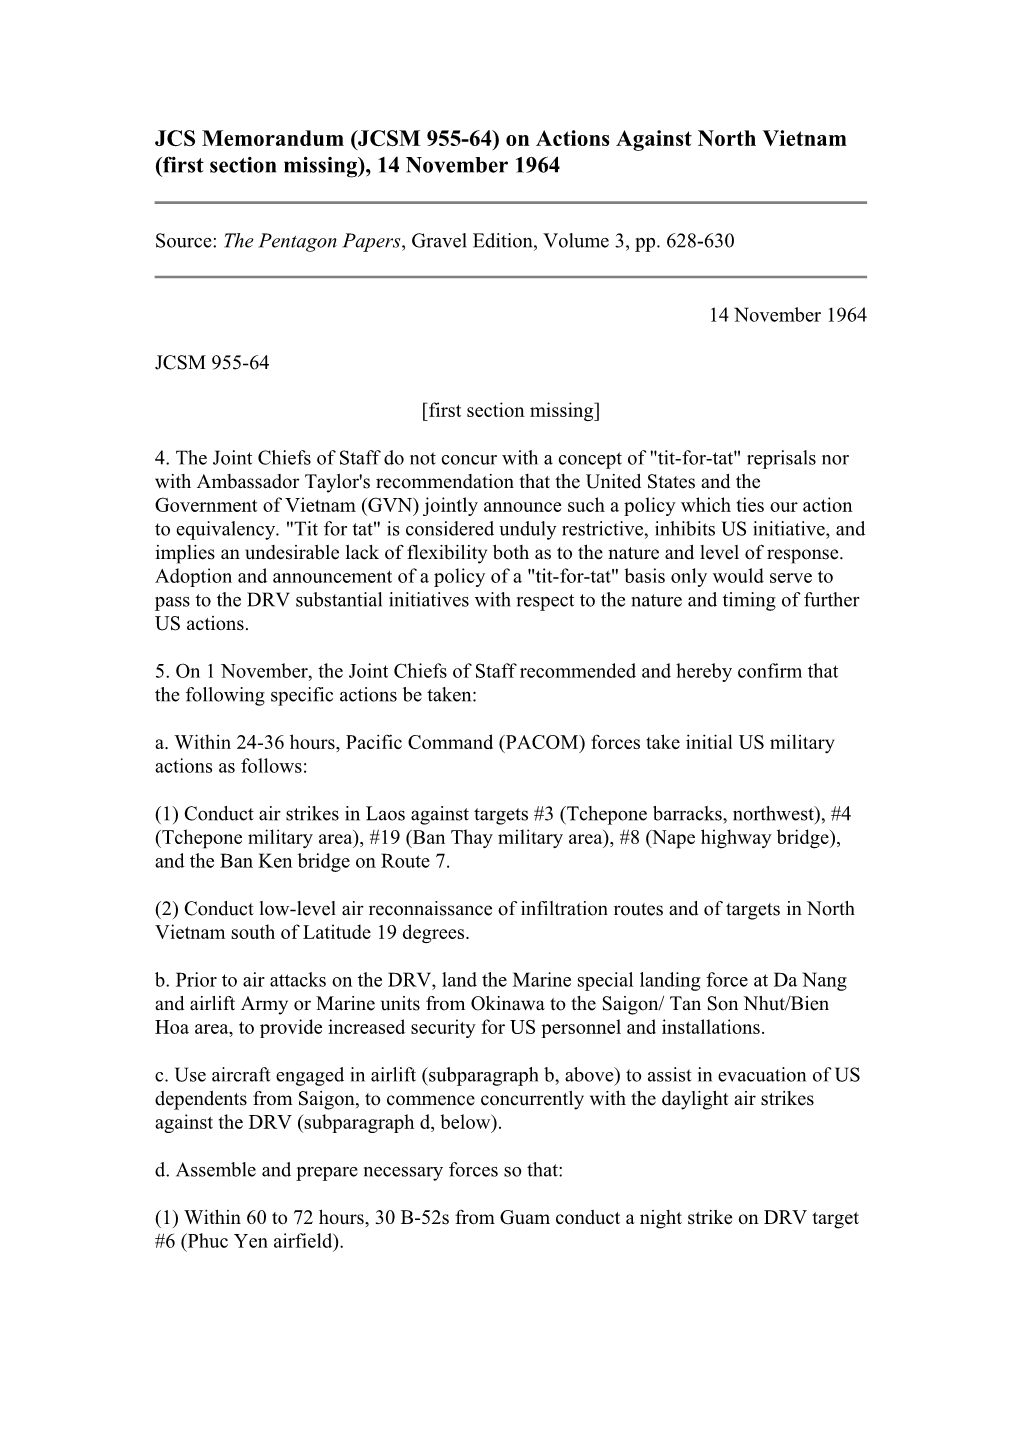 JCS Memorandum (JCSM 955-64) on Actions Against North Vietnam (First Section Missing)